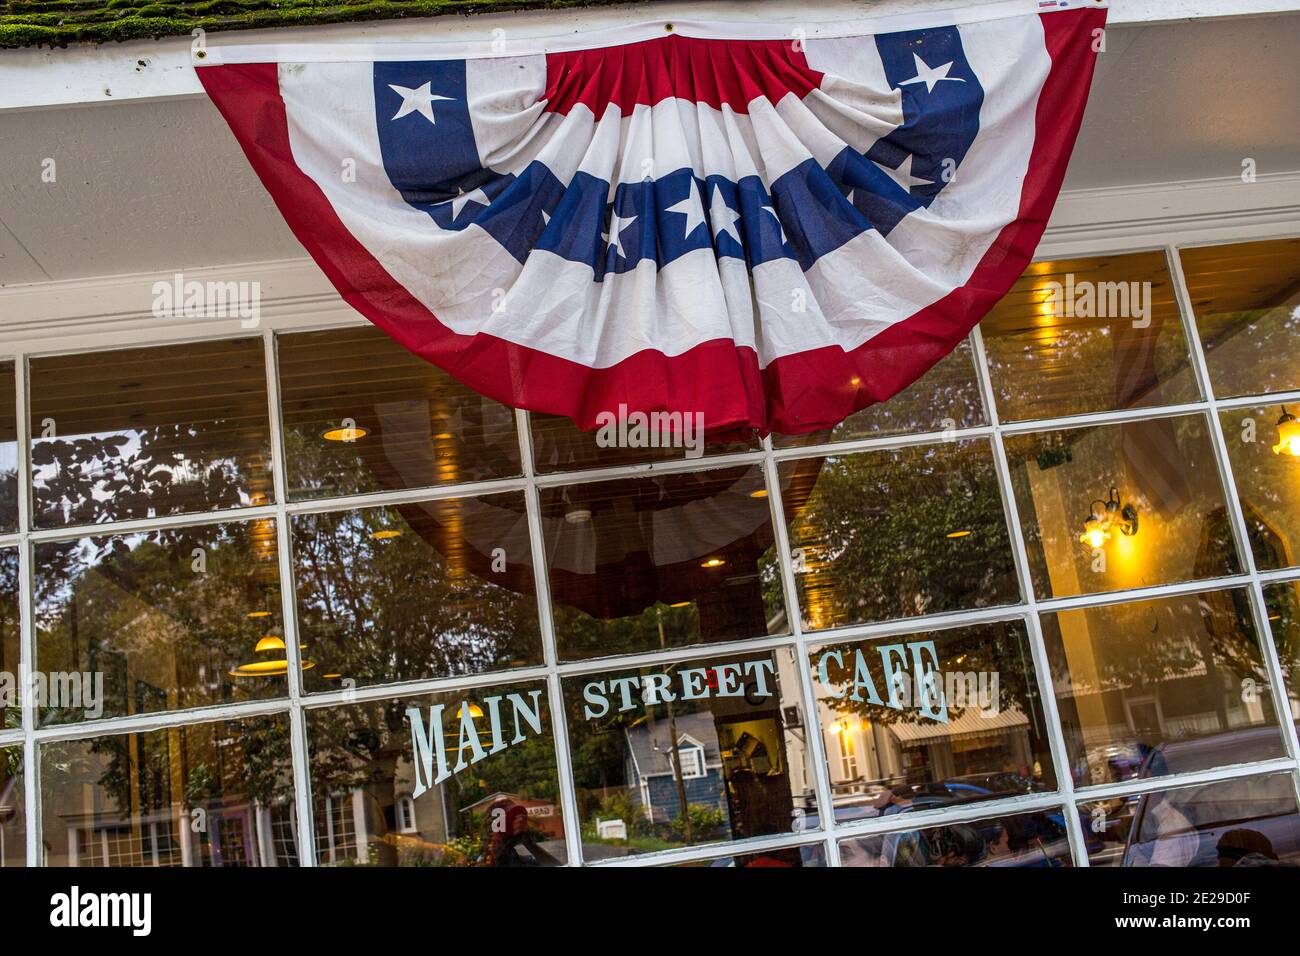 The Main Street Cafe in Stockbridge, Massachusetts Stock Photo